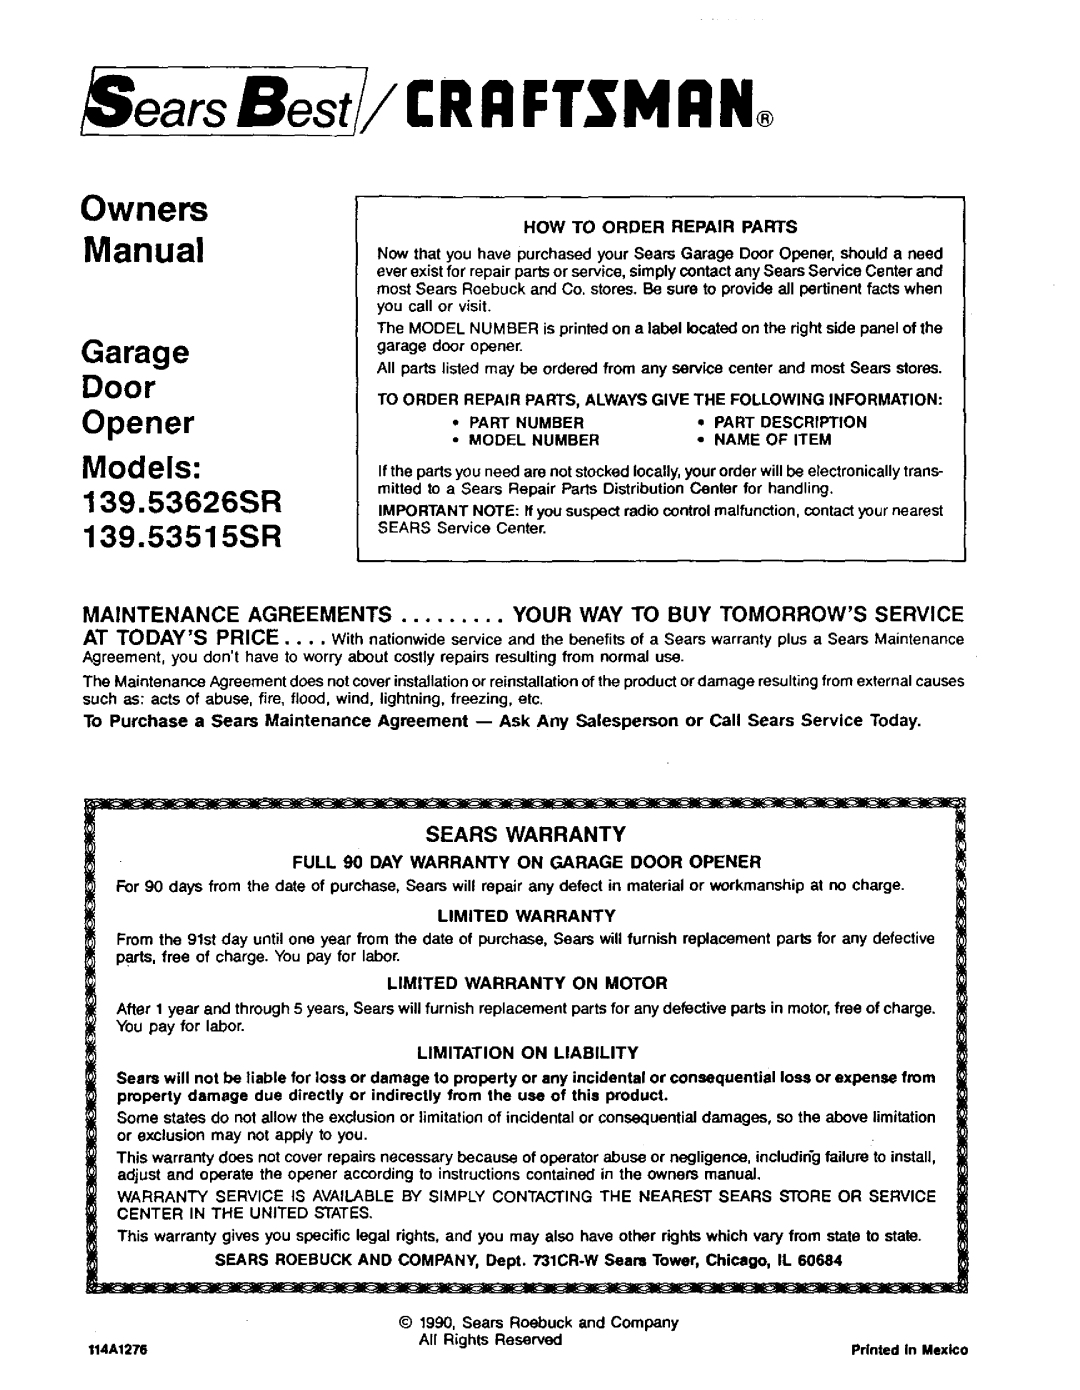 Craftsman 139.53515SR - I/2HP Owners Manual, Door, Models, 139.53626SR, Sears Warranty, How To Order Repair Parts, Garage 